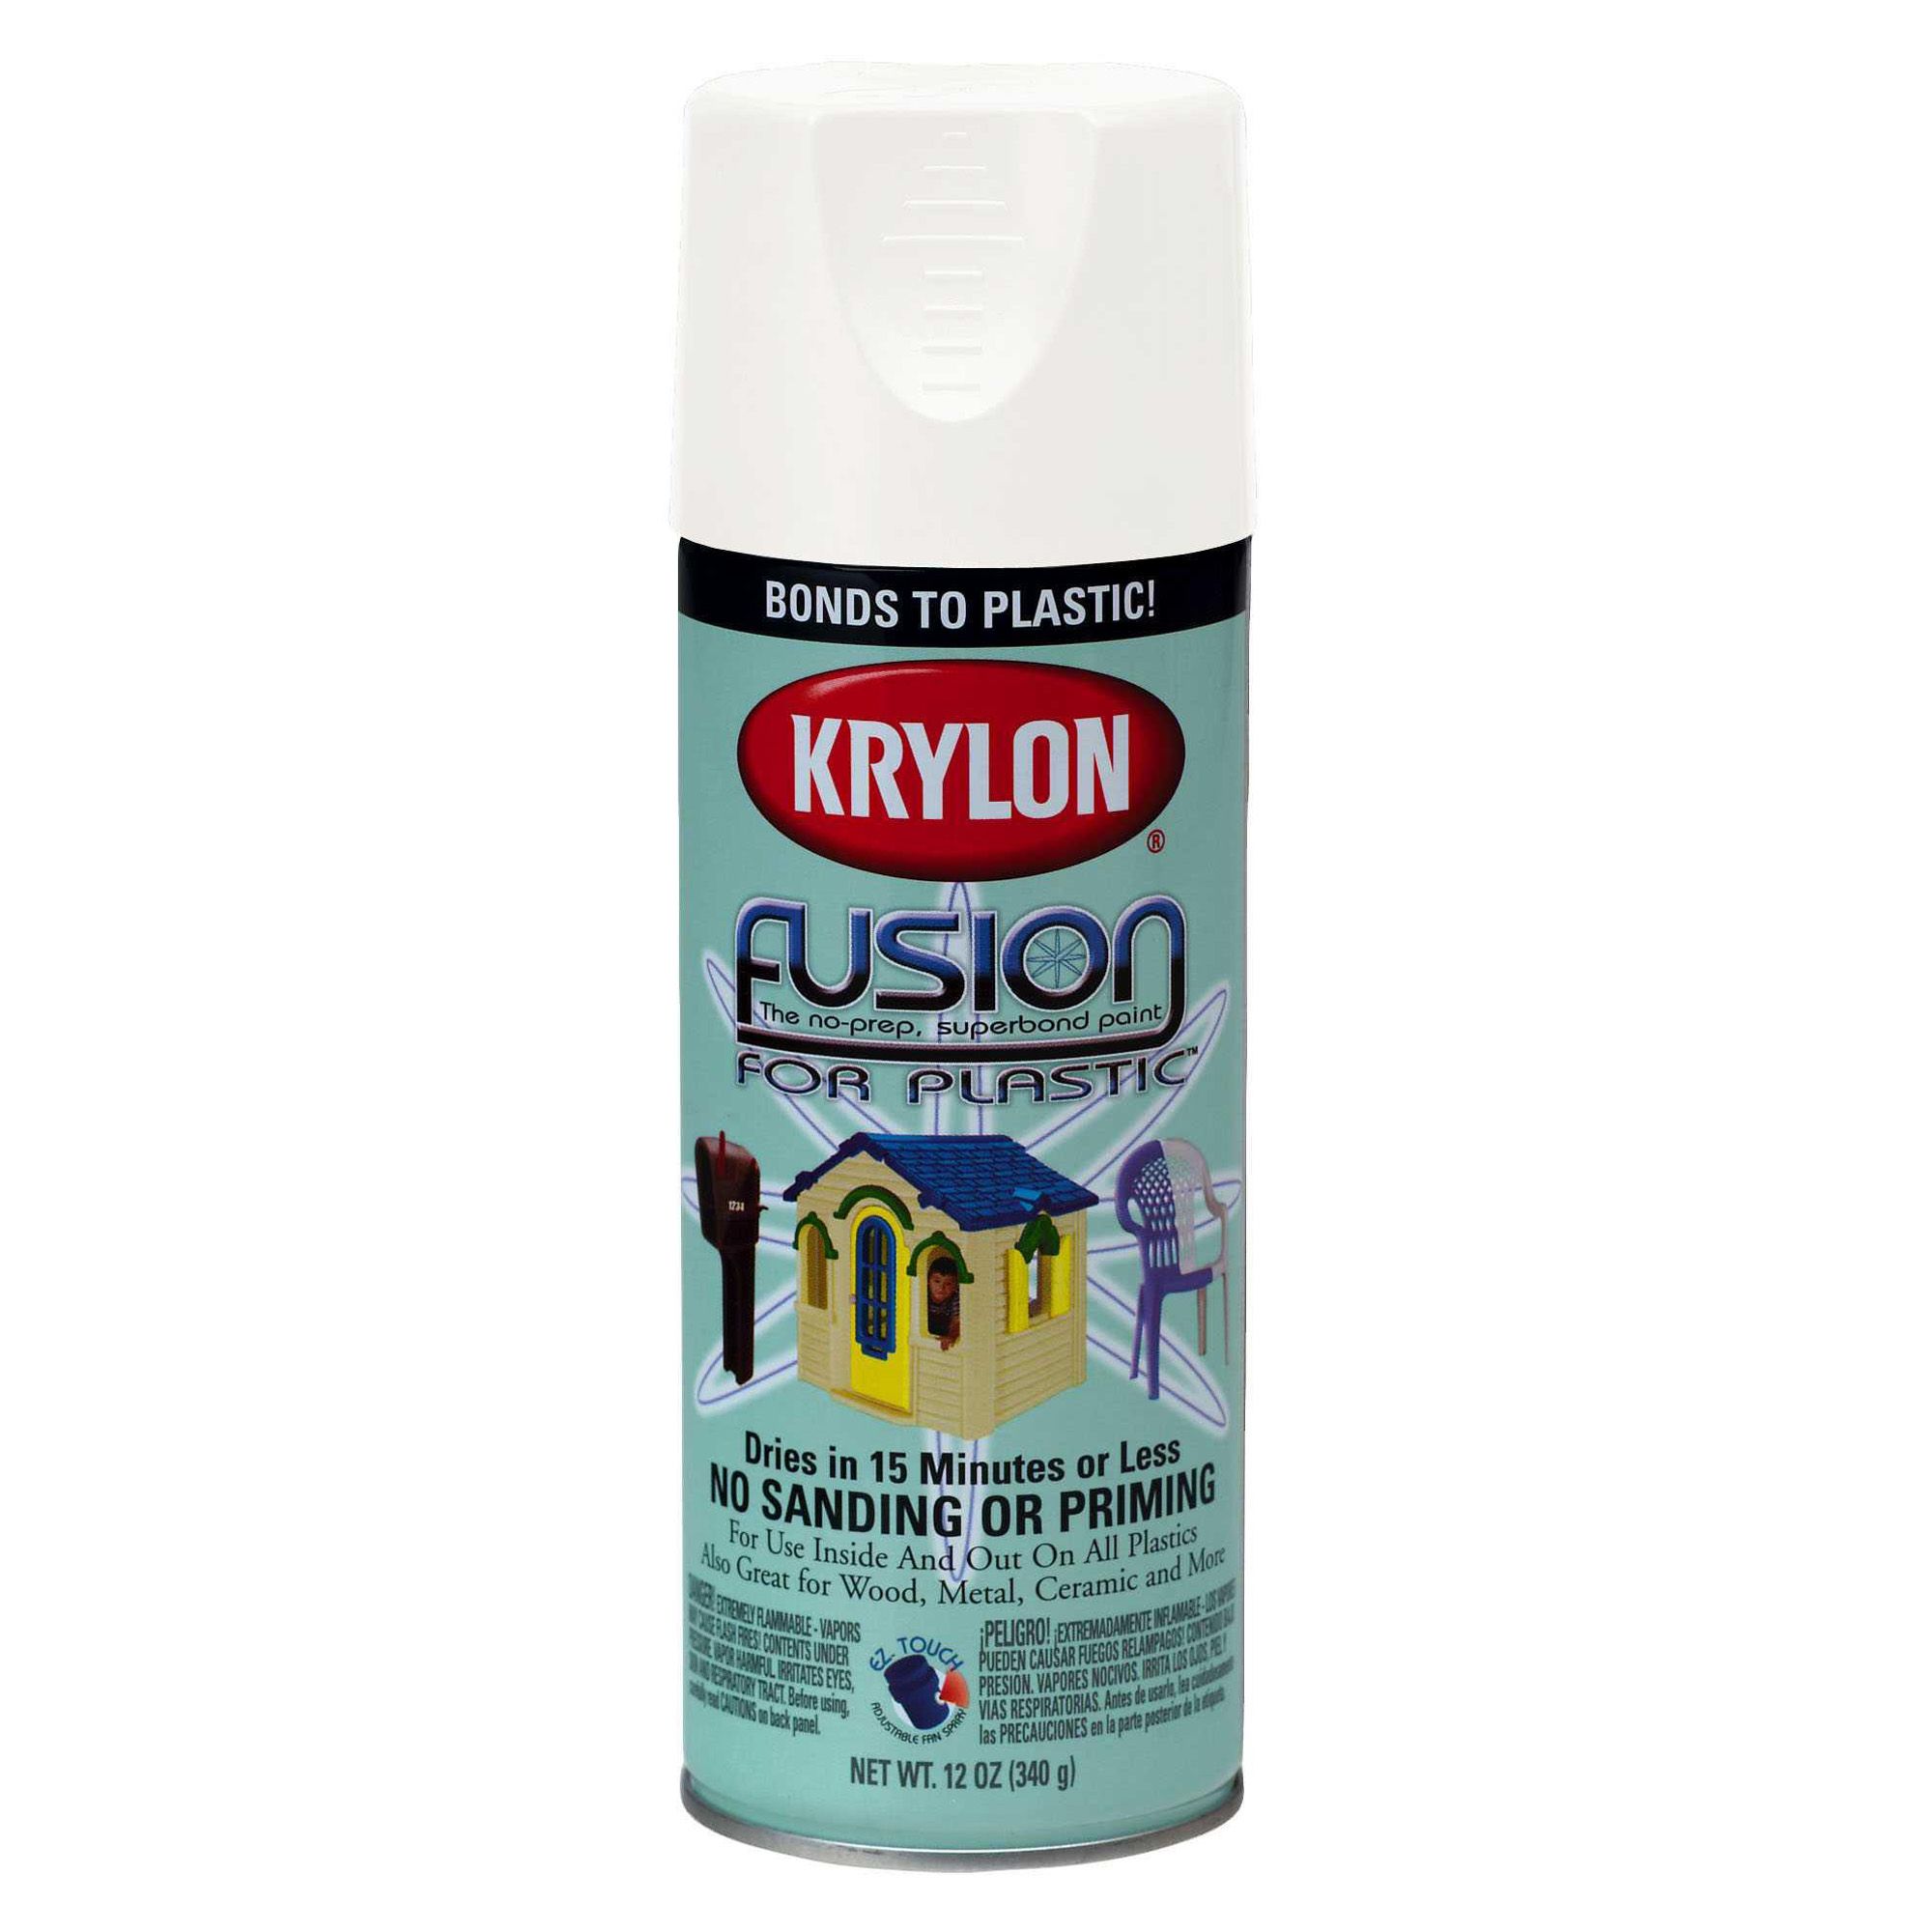 Krylon Fusion for Plastic® Gloss White Tools